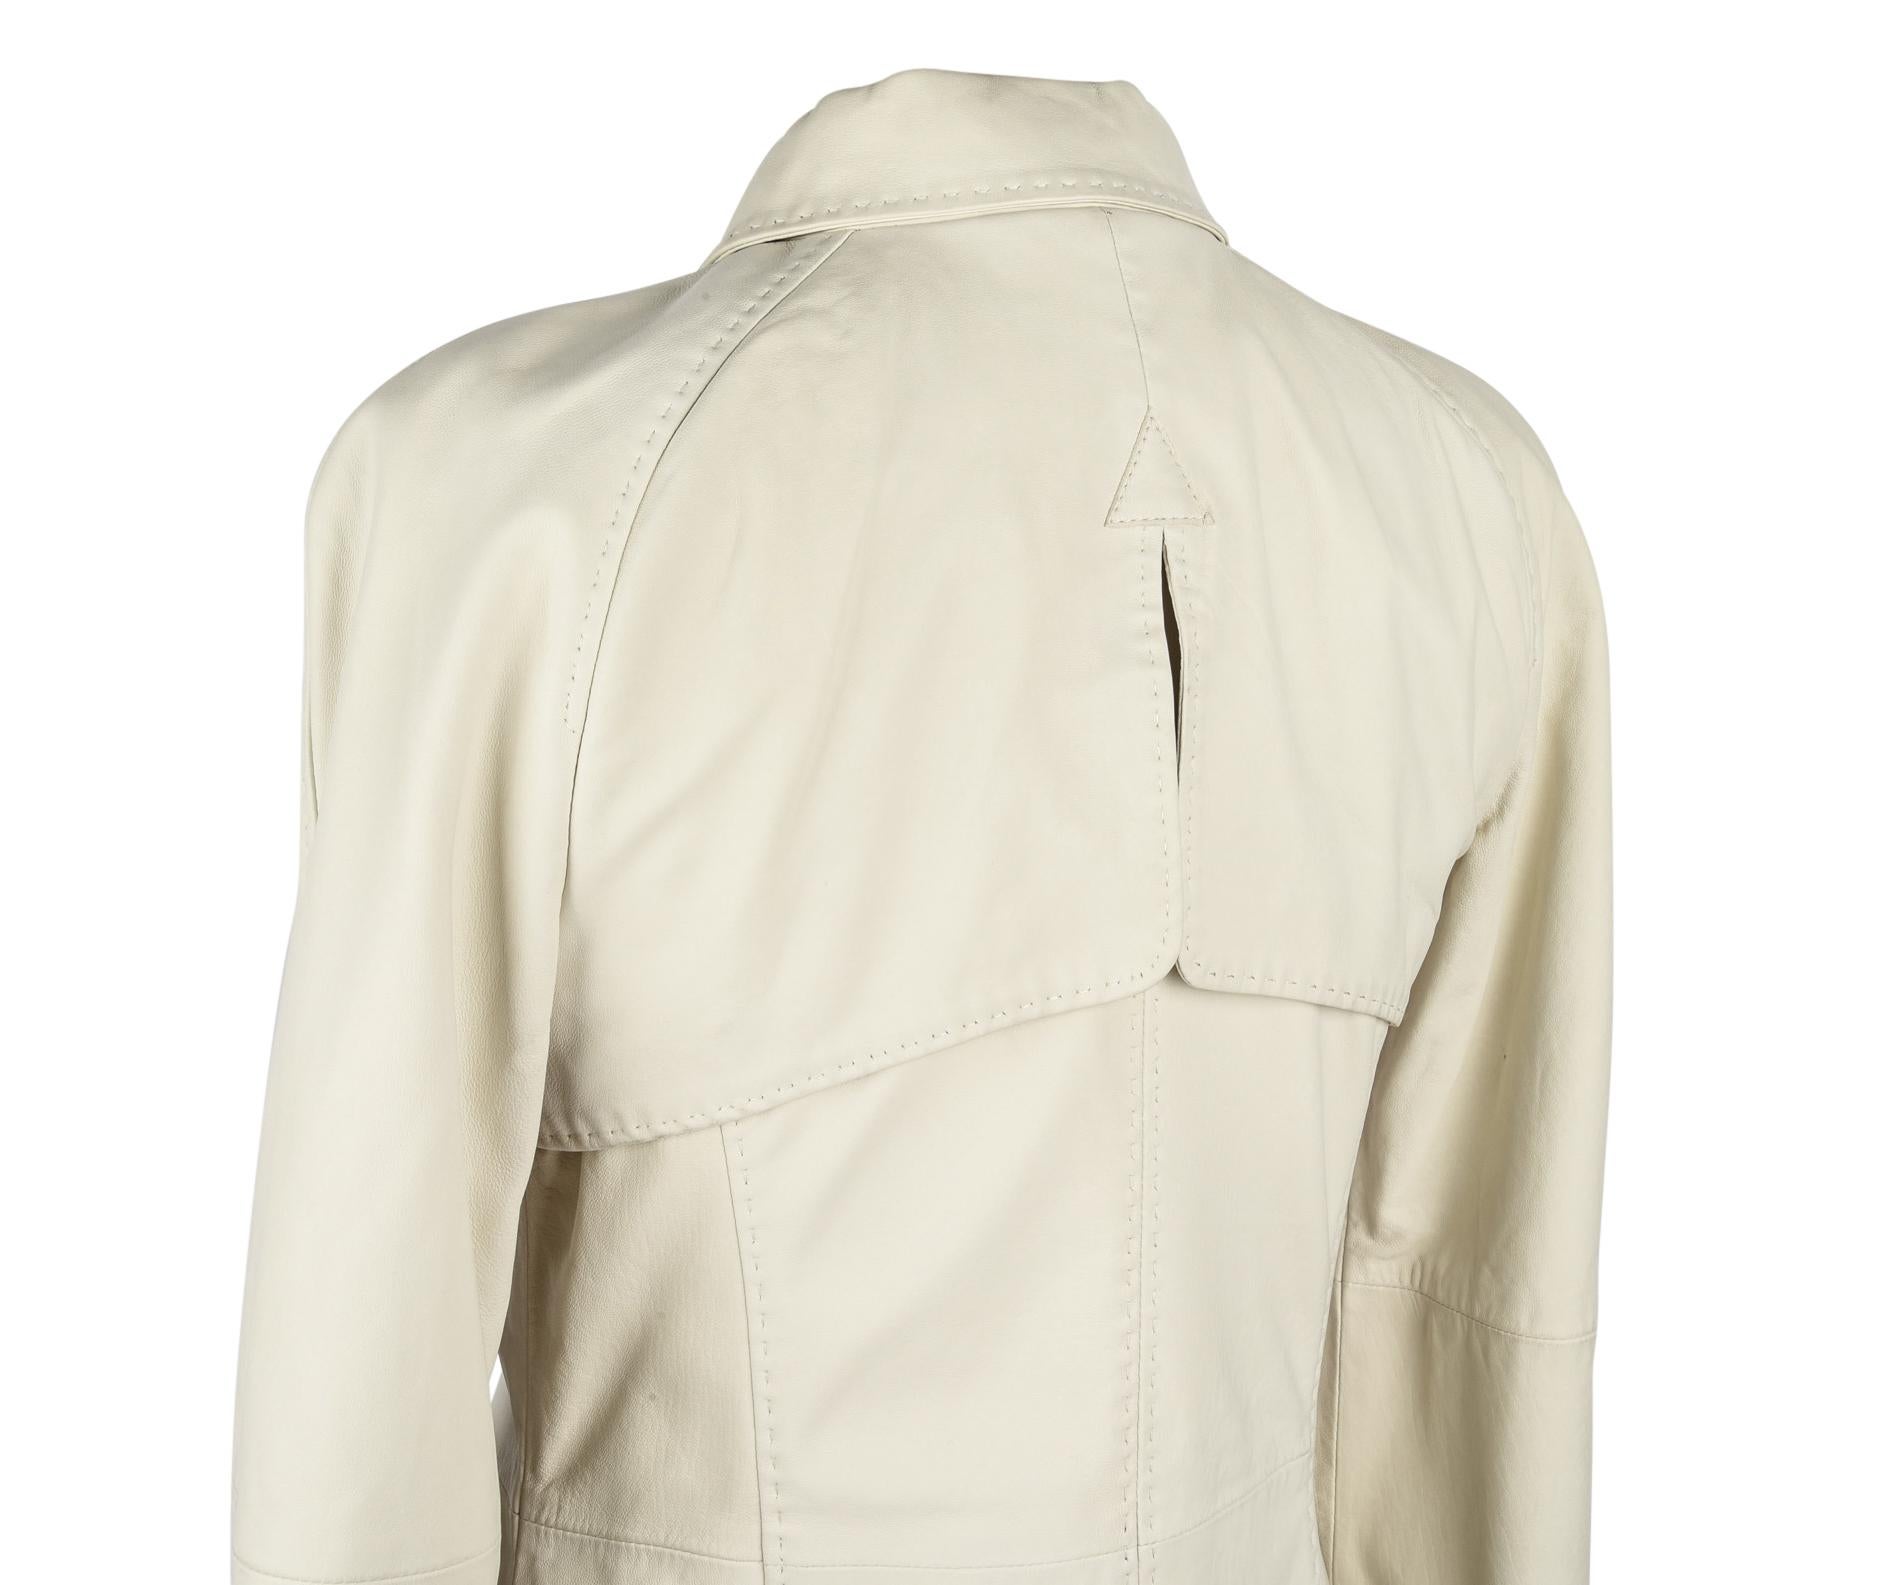 Giorgio Armani Coat Lambskin Leather Winter White 38 / 6 NWT 5